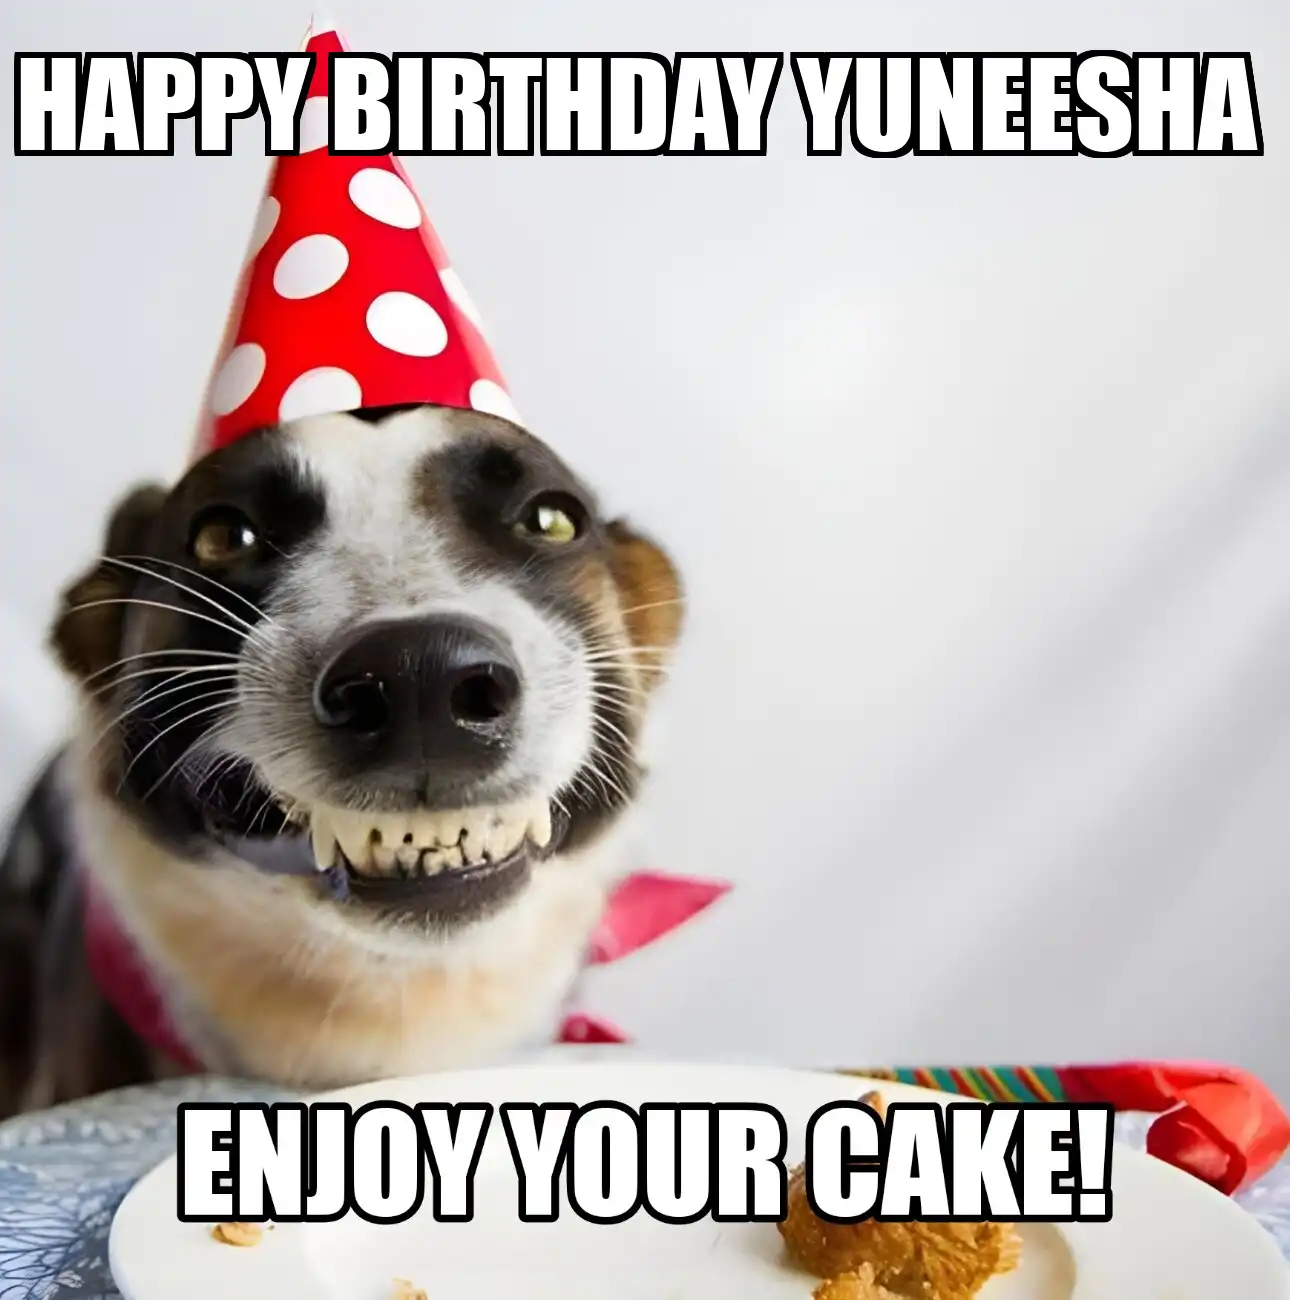 Happy Birthday Yuneesha Enjoy Your Cake Dog Meme